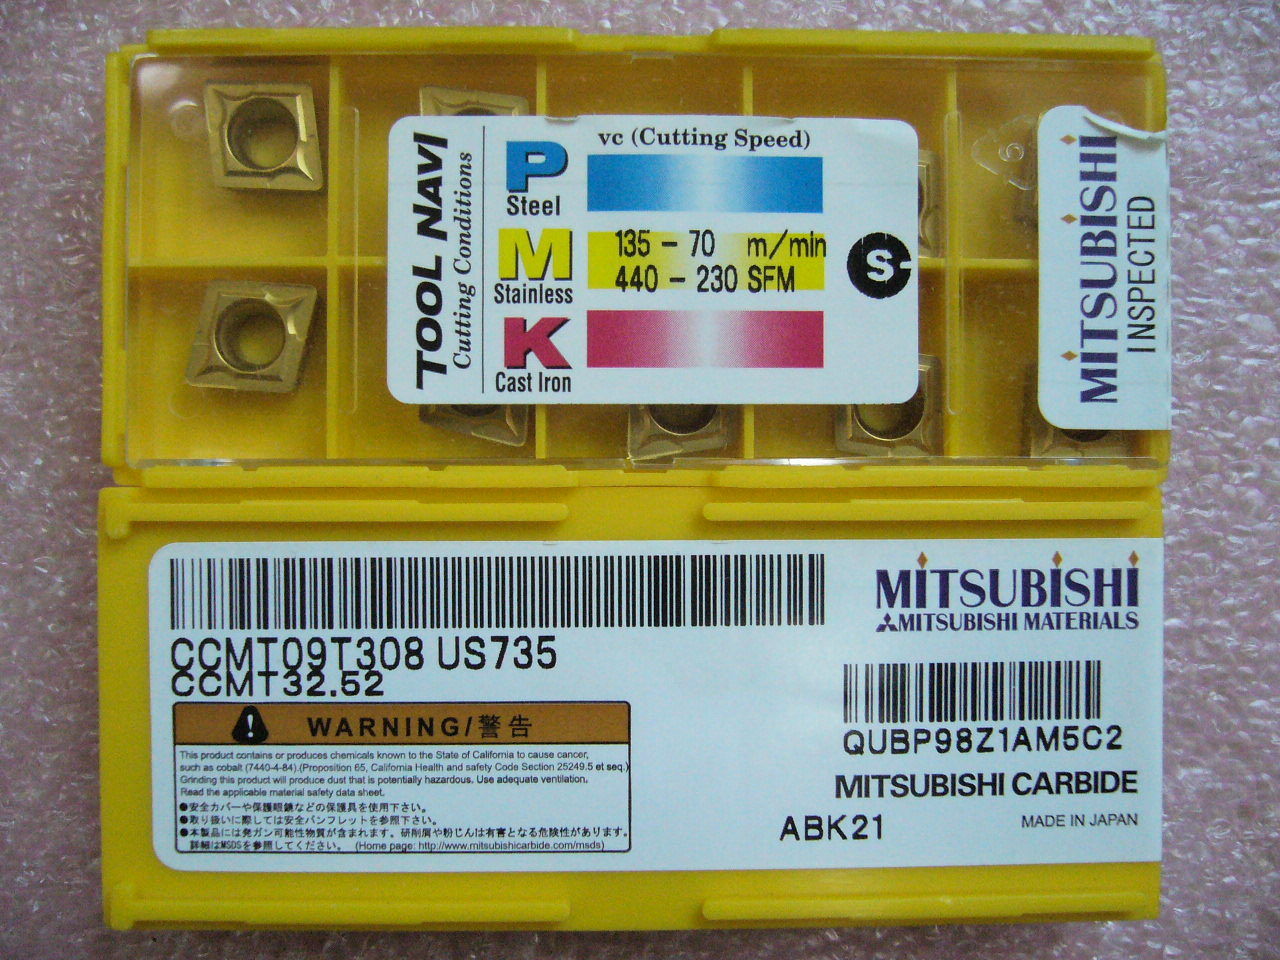 QTY 20x Mitsubishi CCMT32.52 CCMT09T308 US735 NEW